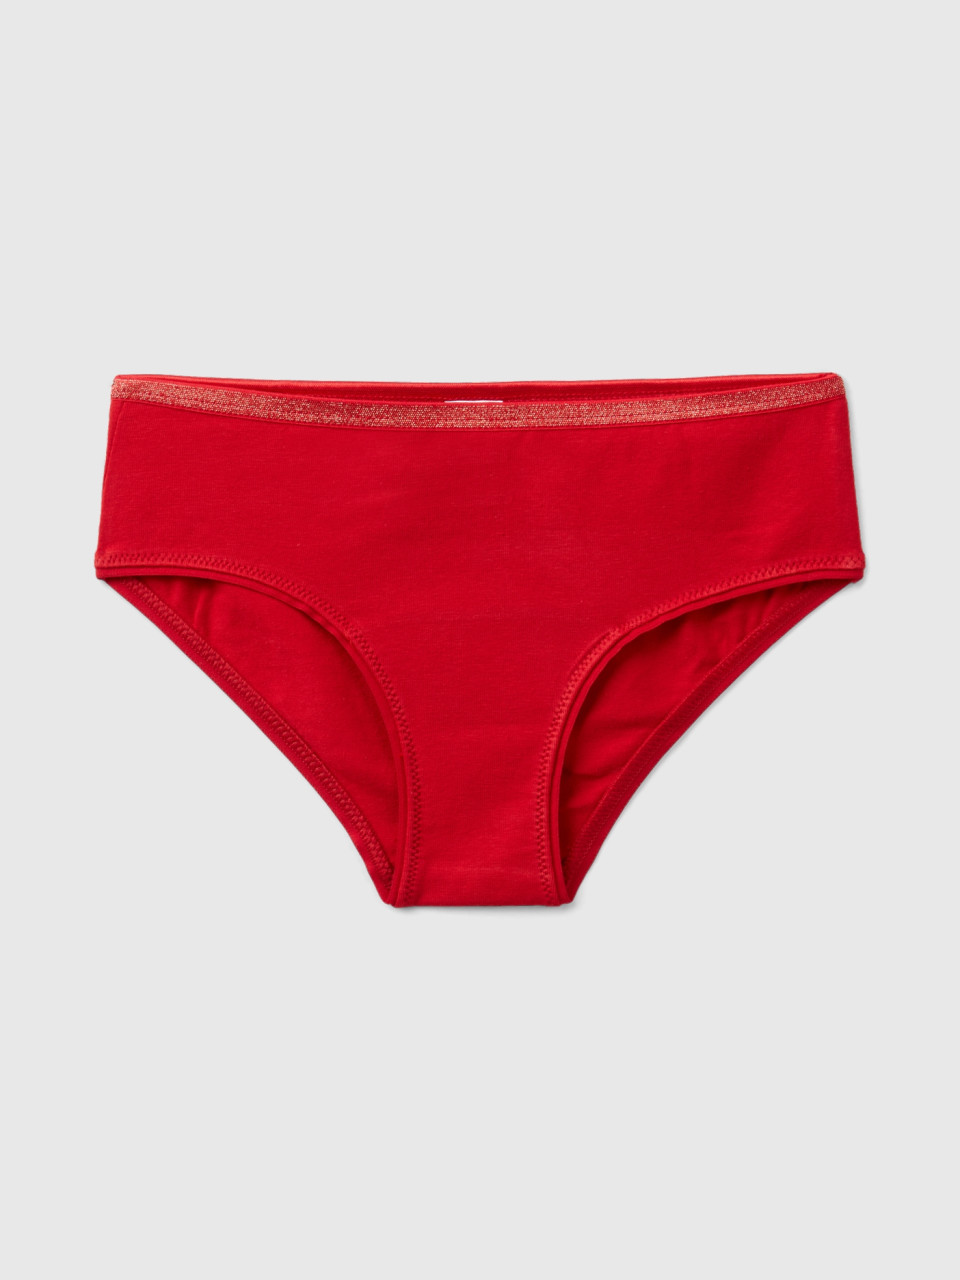 Benetton, Underwear With Minnie Mouse Print, Red, Kids